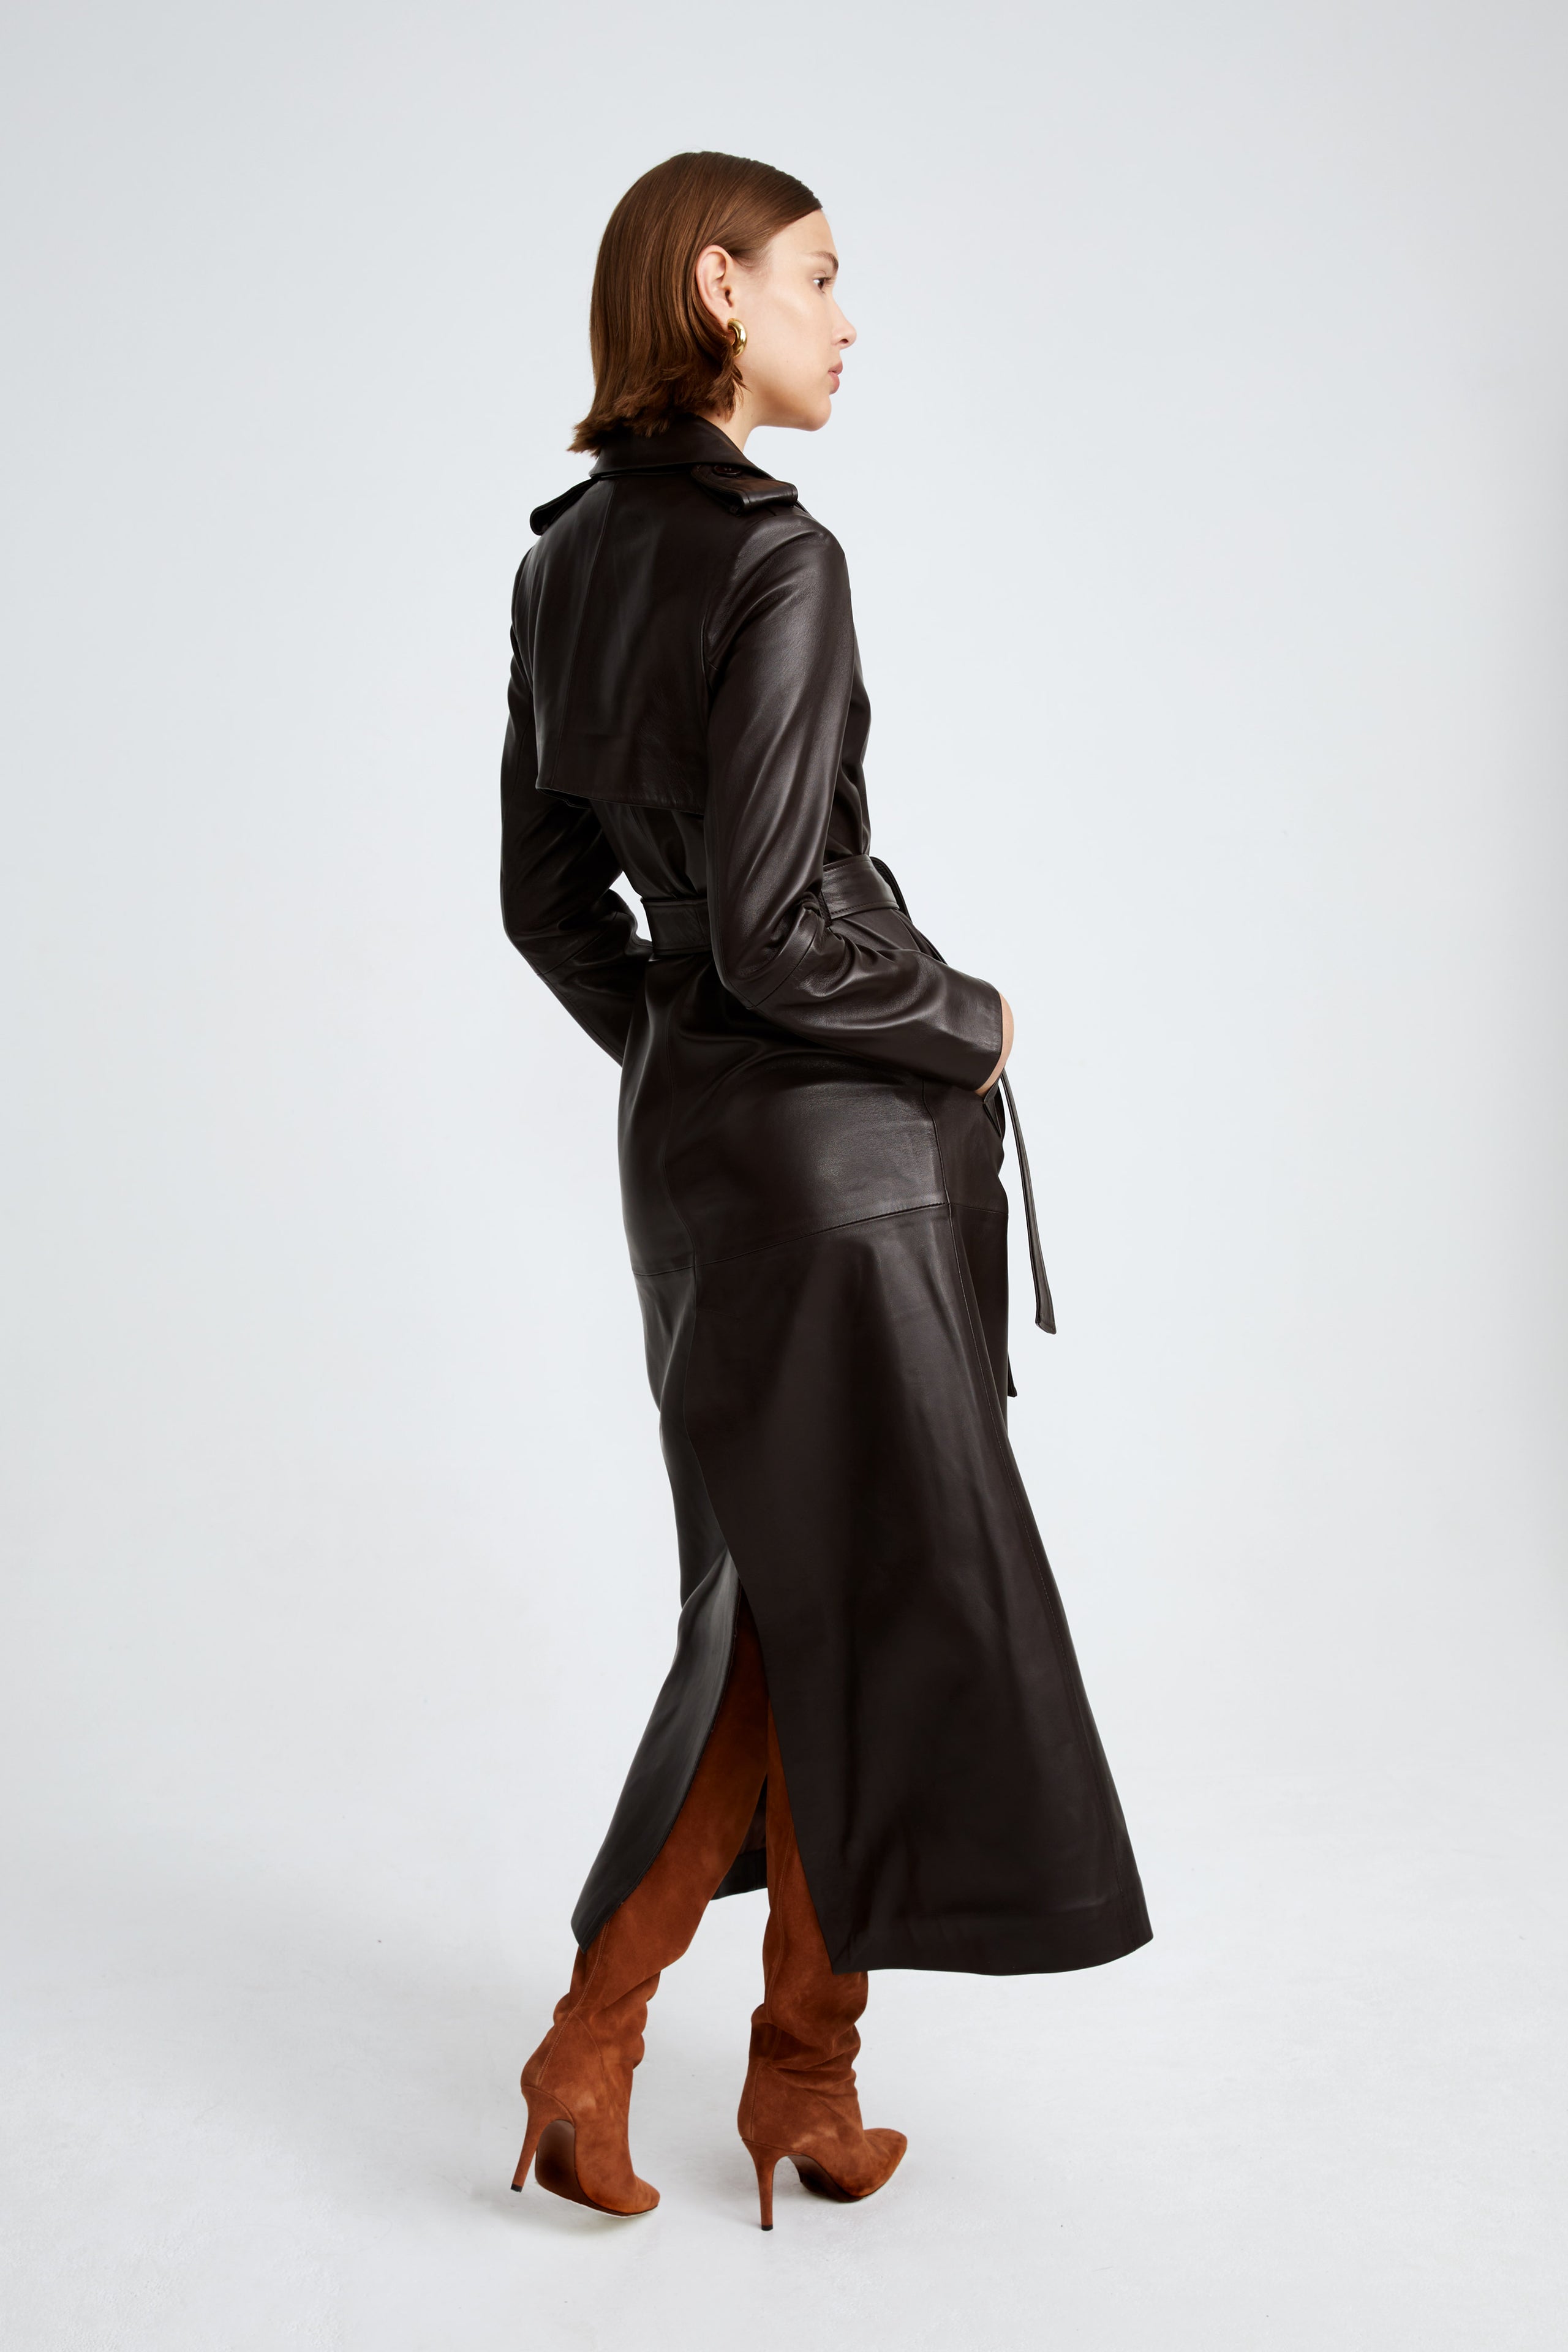 Model is wearing the Scarlett Umber Belted Leather Coat Back